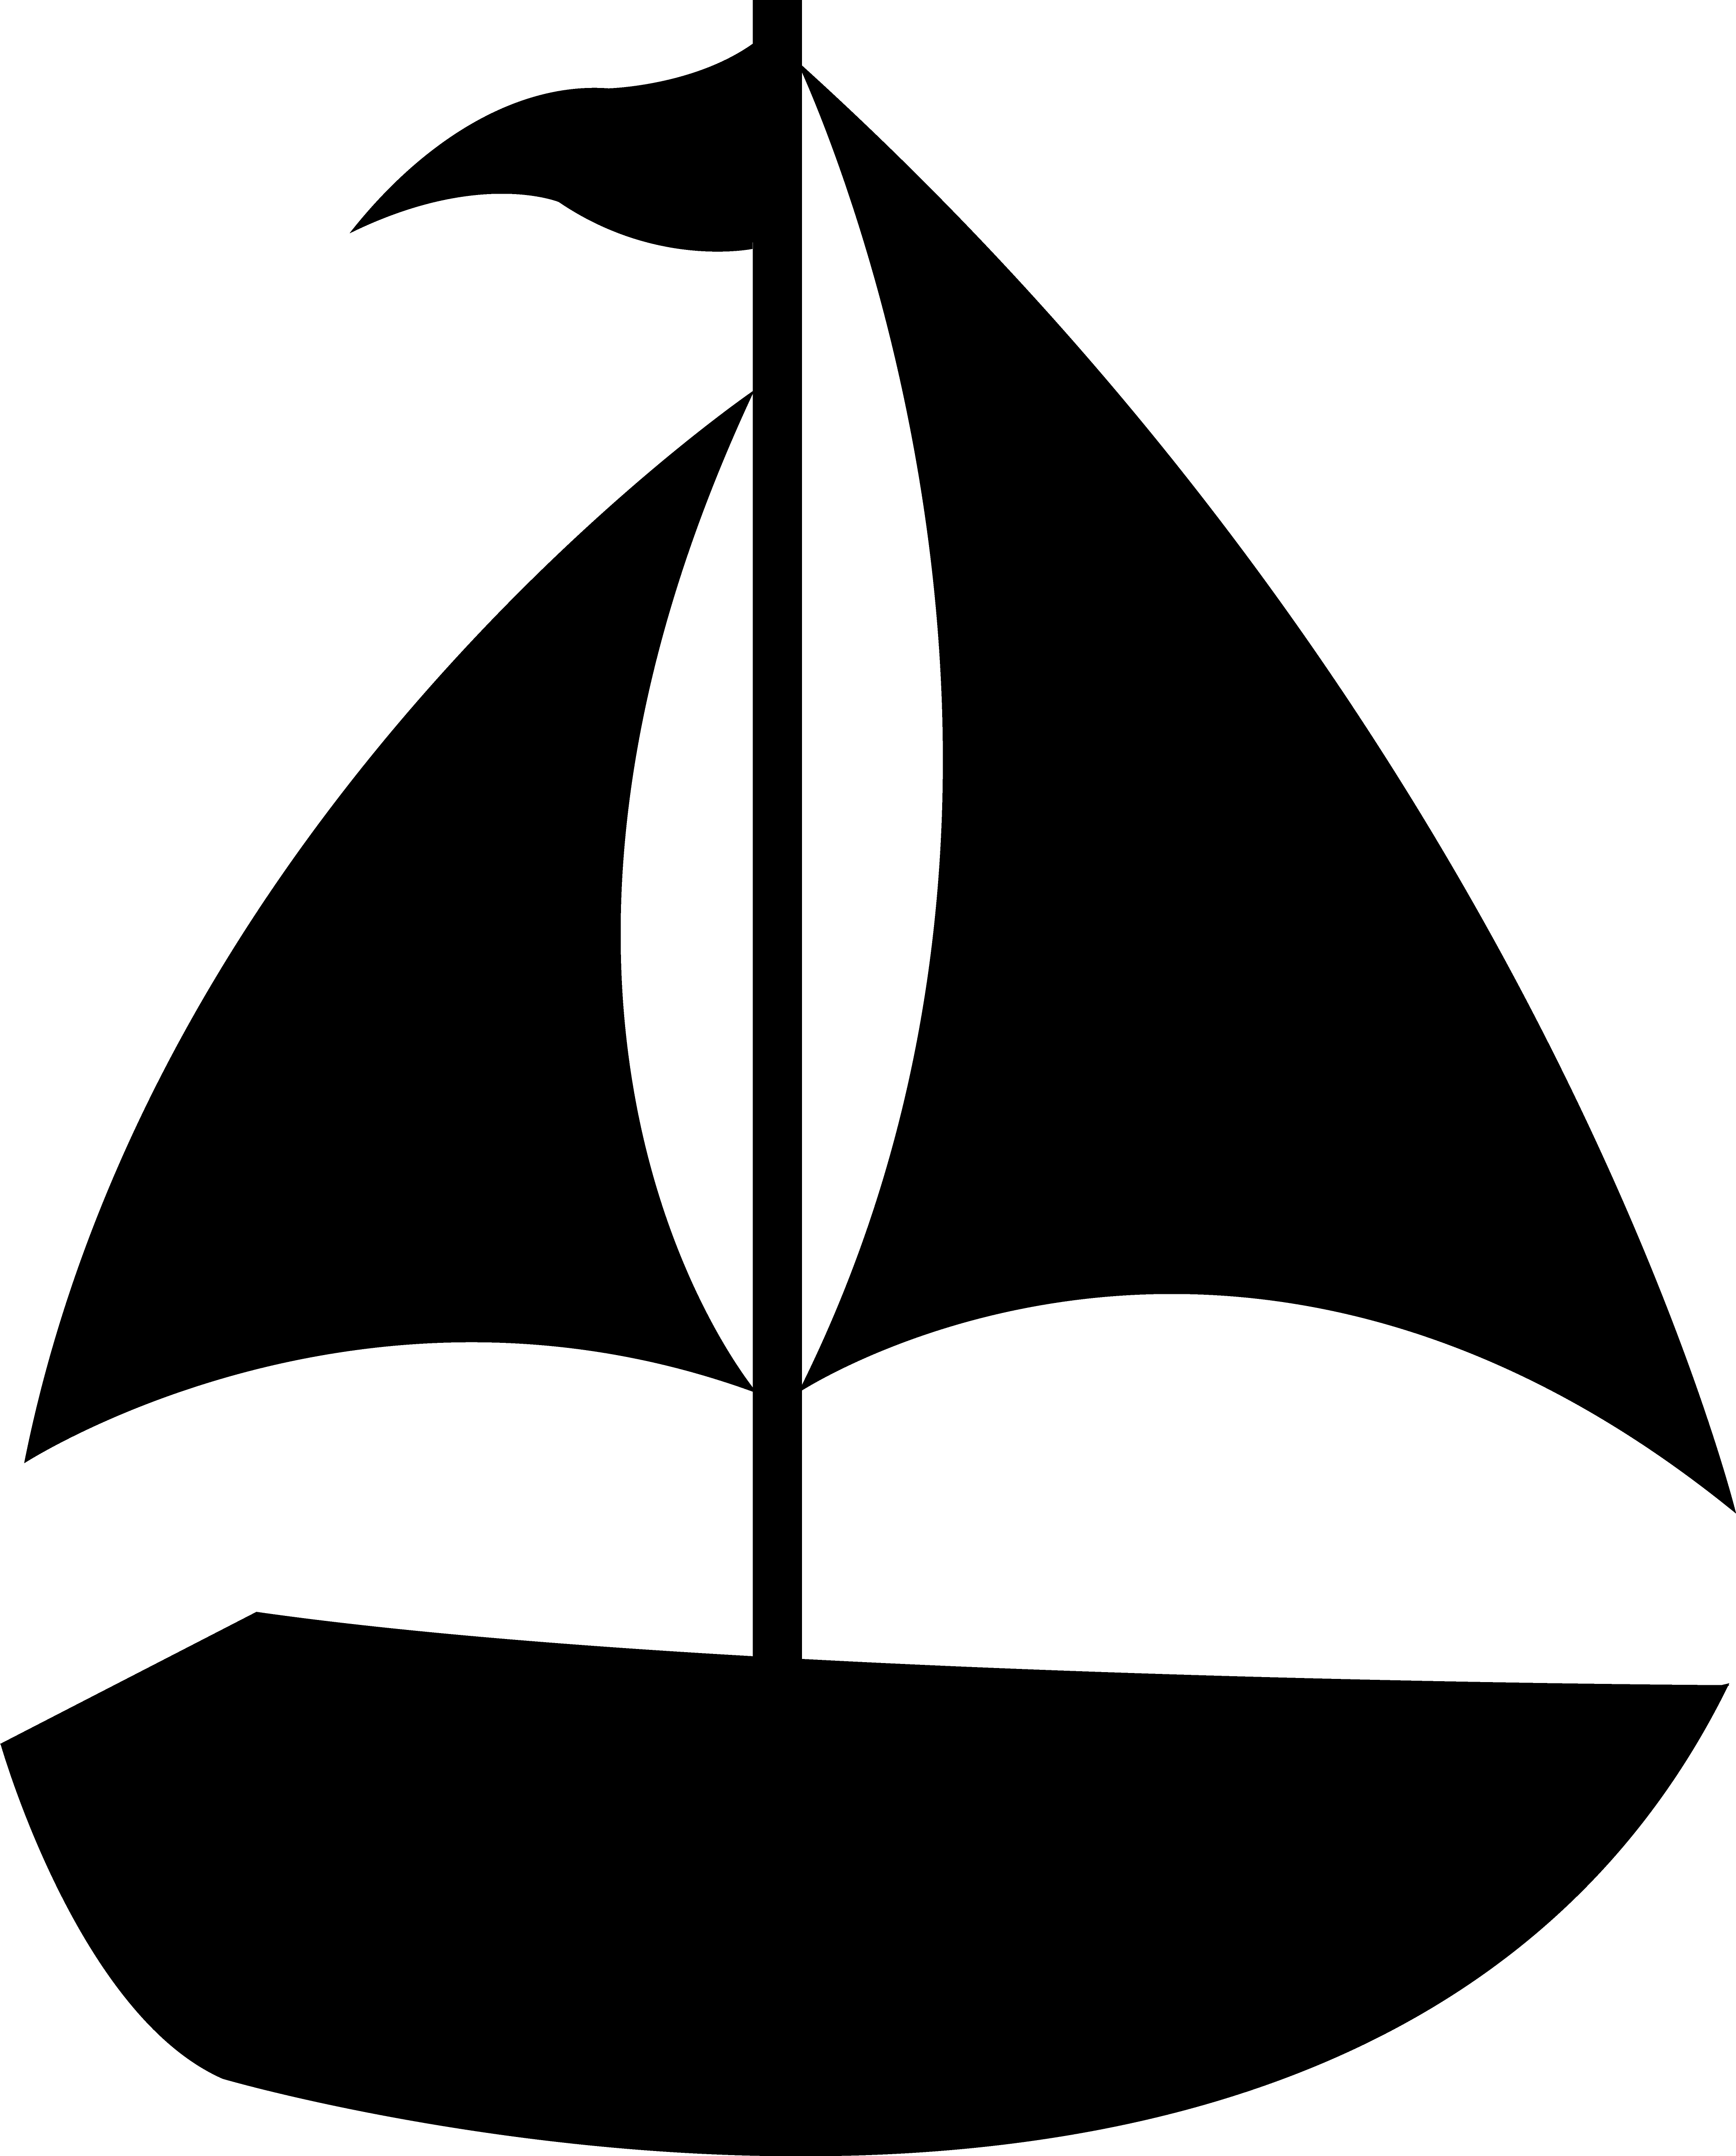 Logo clipart aquaman. Medieval castle silhouette at